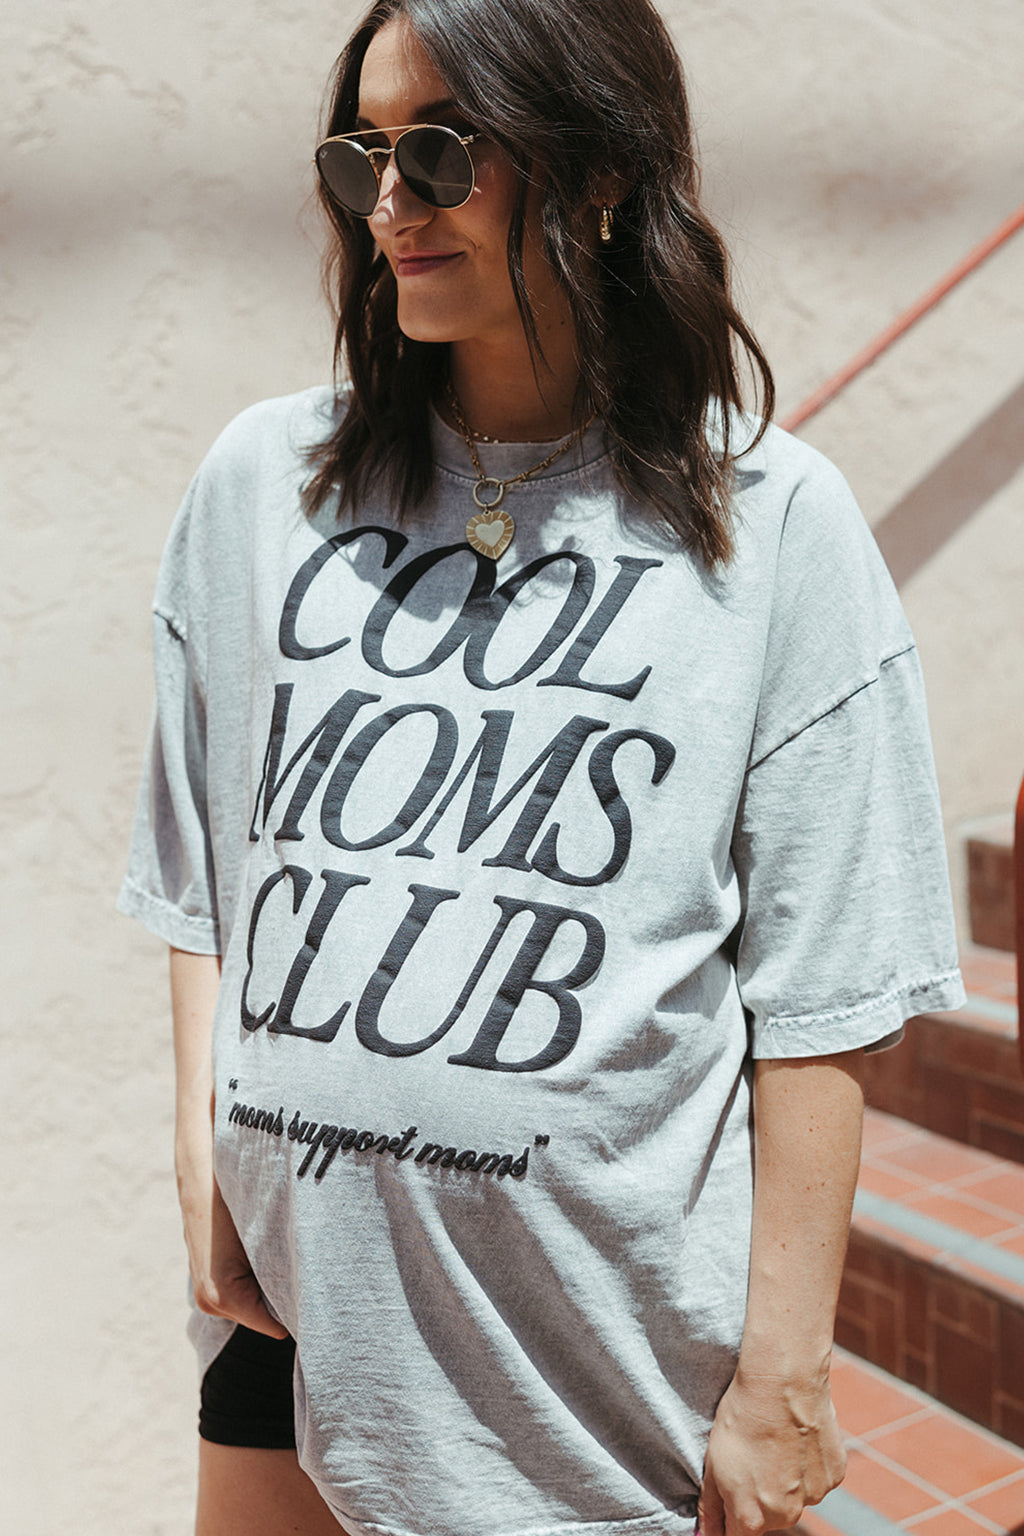 KL+SF Cool Moms Club Acid Wash